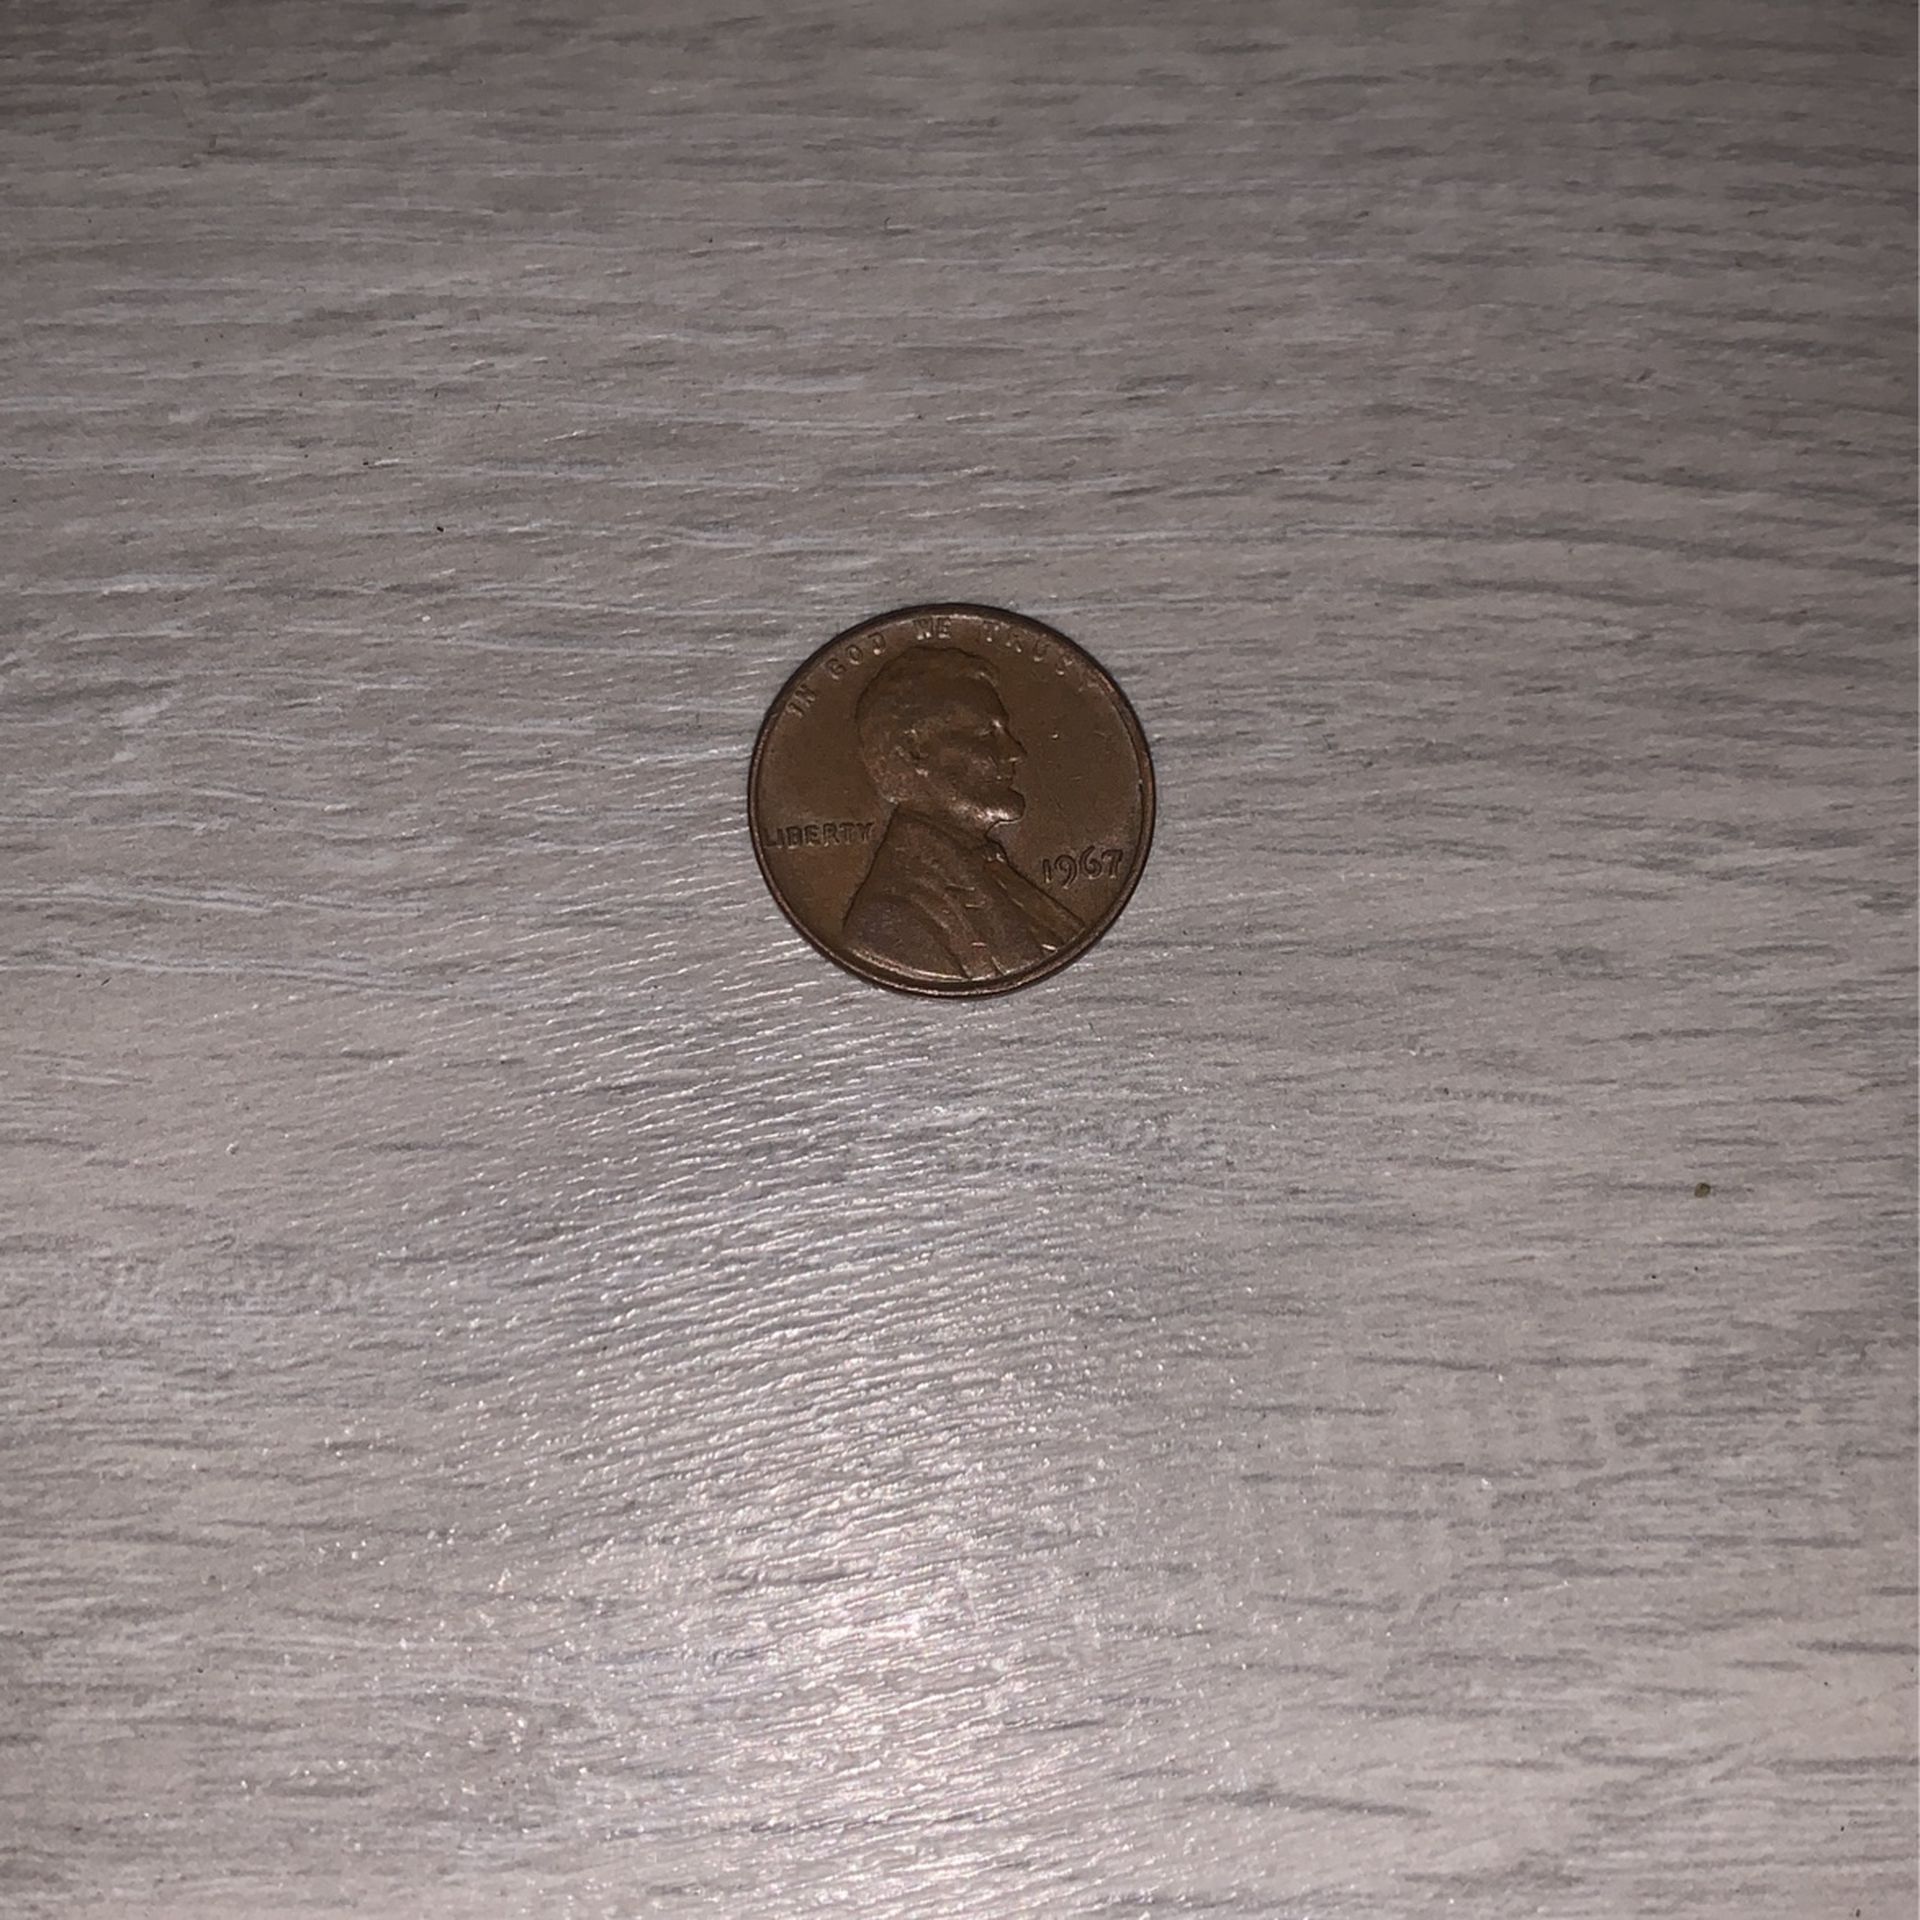 Mint 1967 penny 